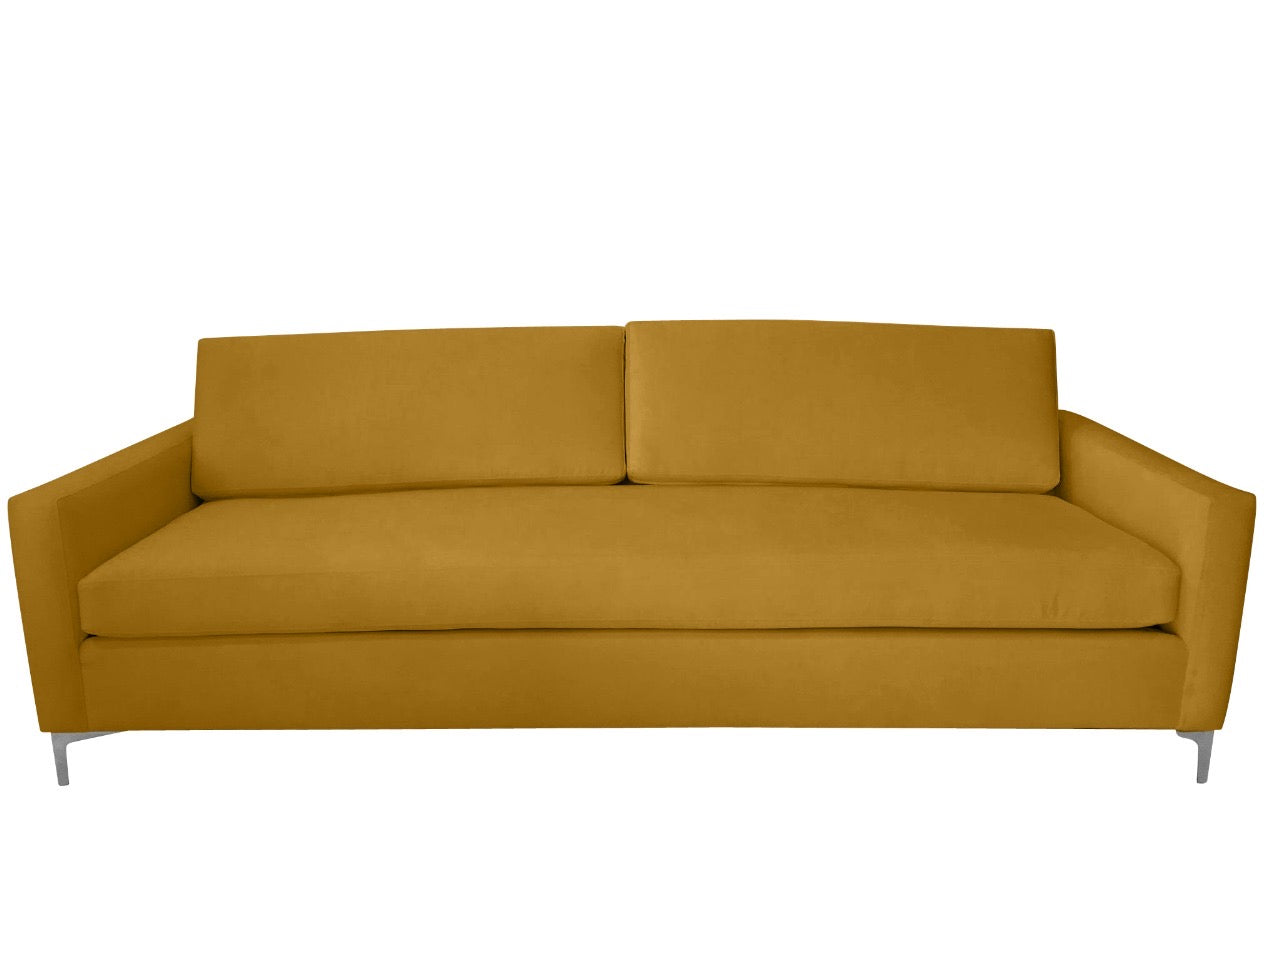 Malibu Sofa- Gold